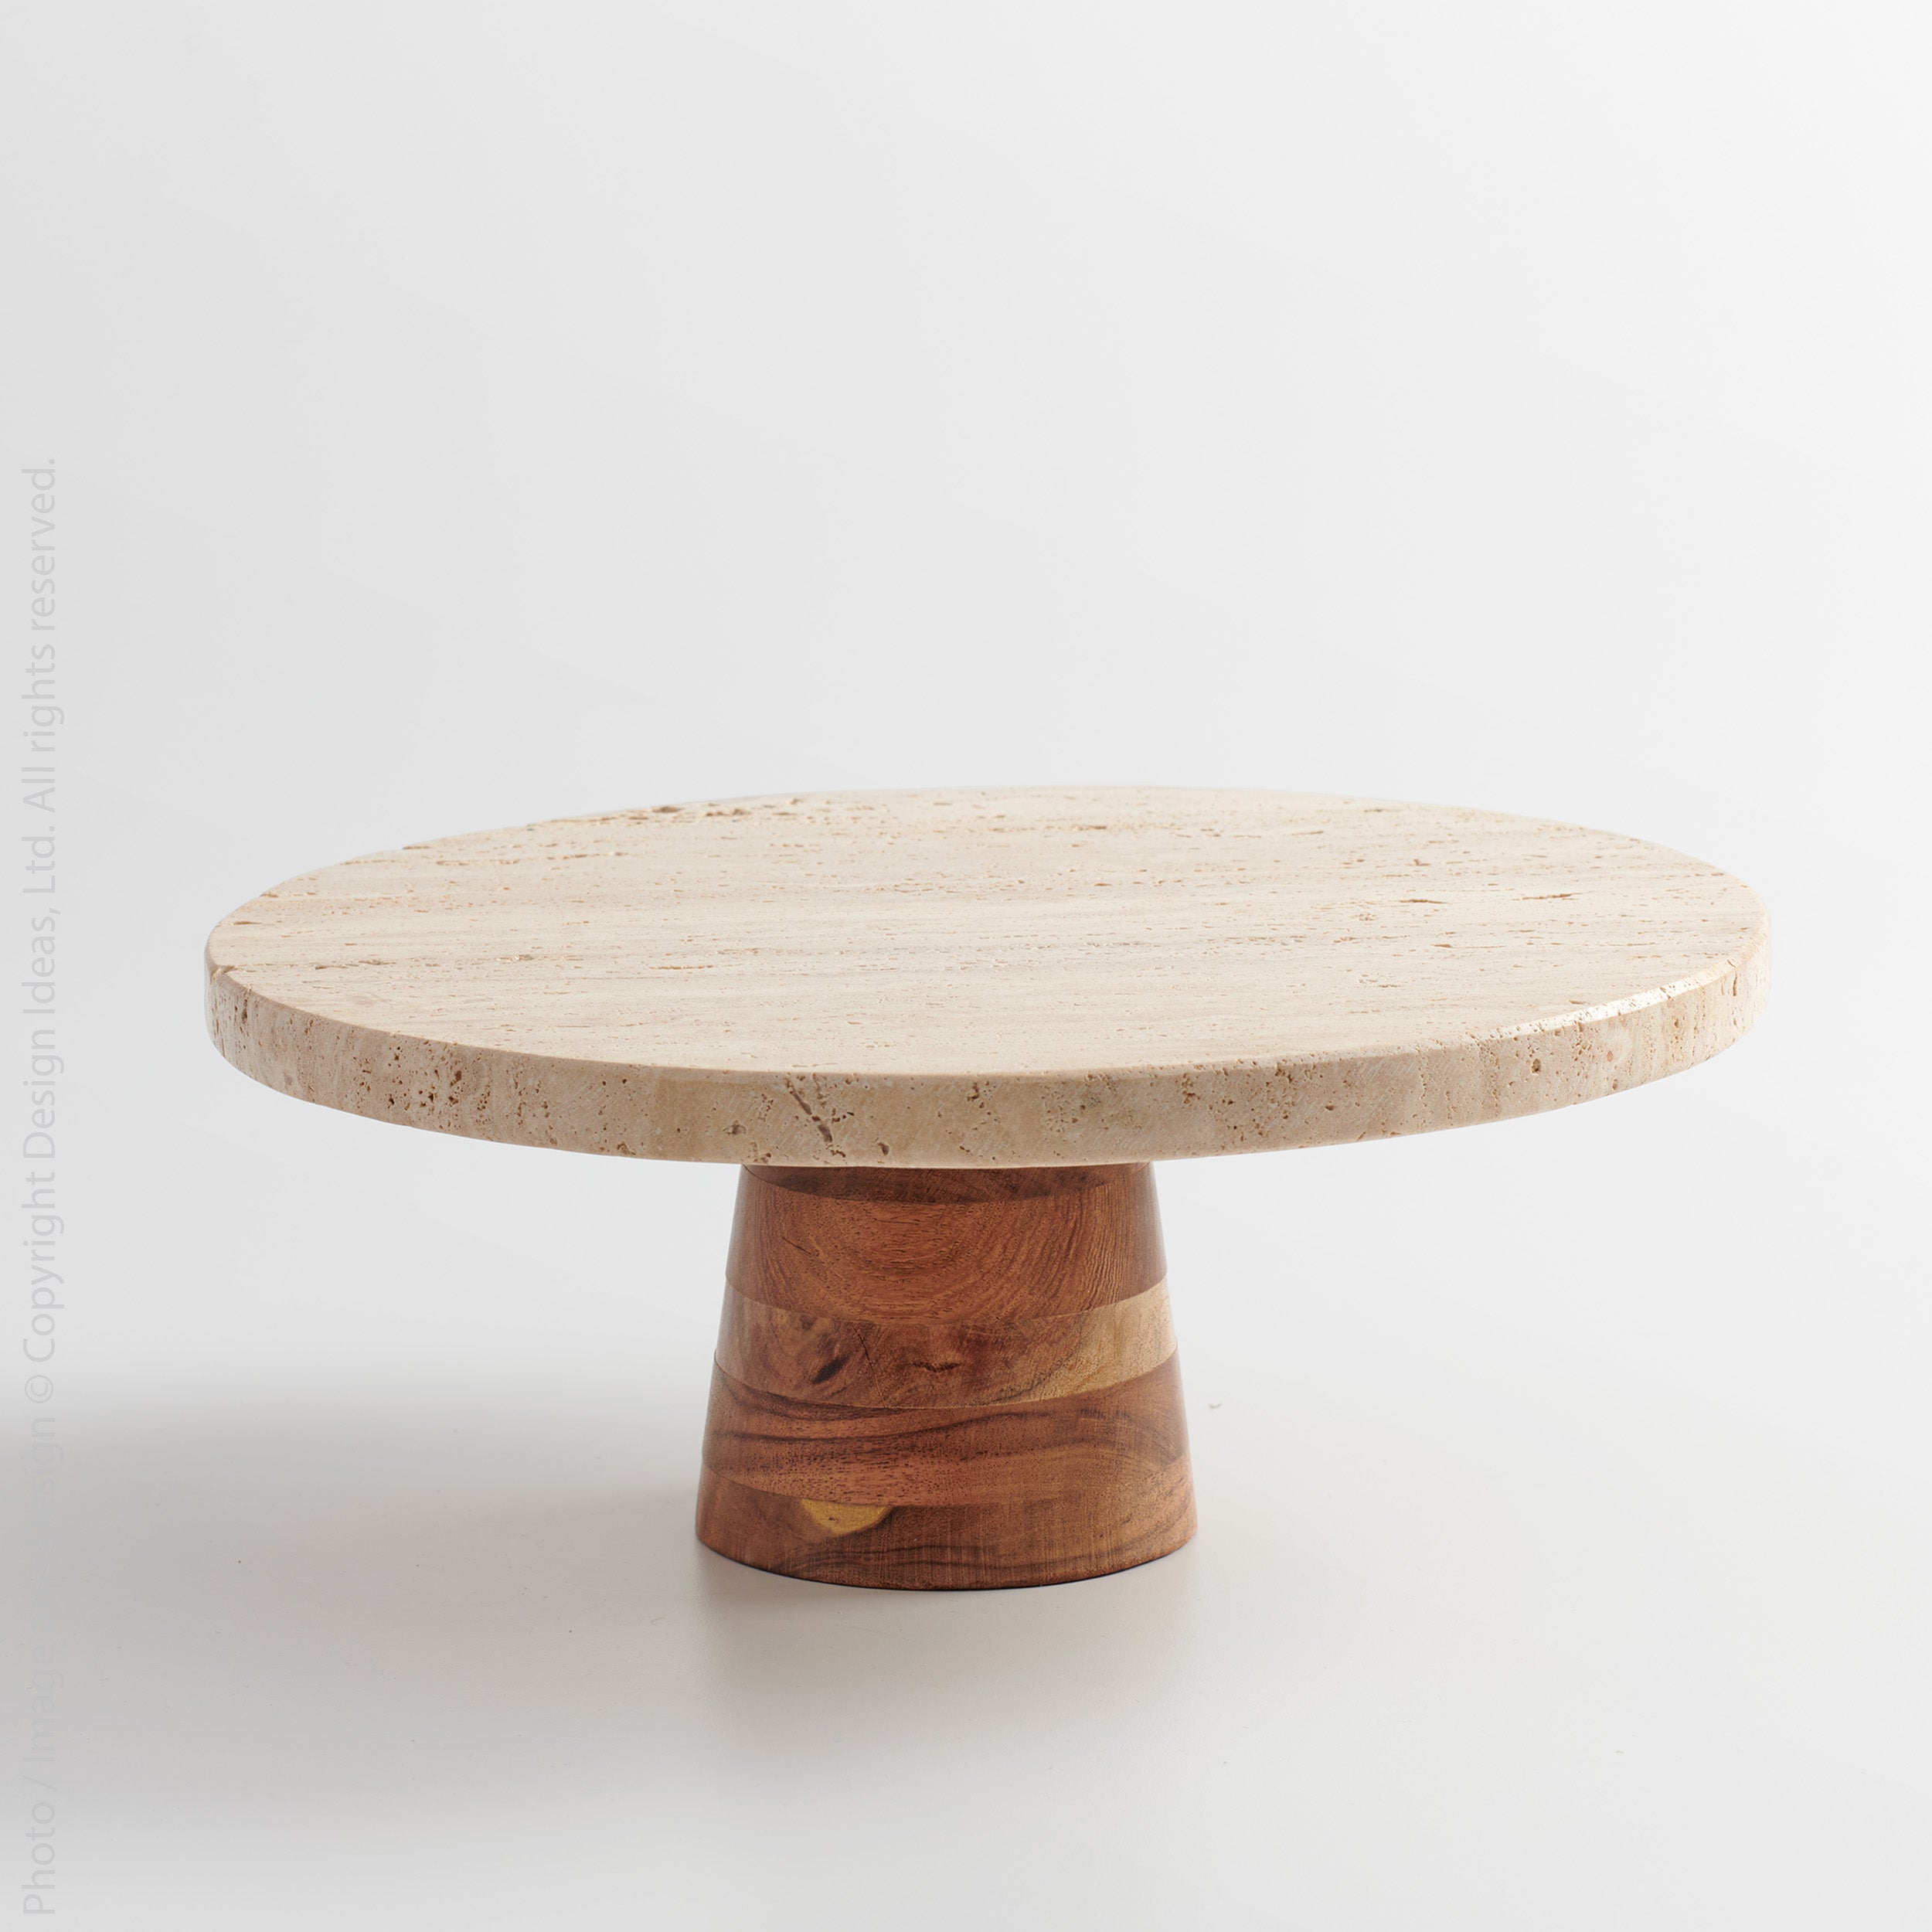 Marbella™ Medium Handmade Travertine and Wood Riser (12 in.)